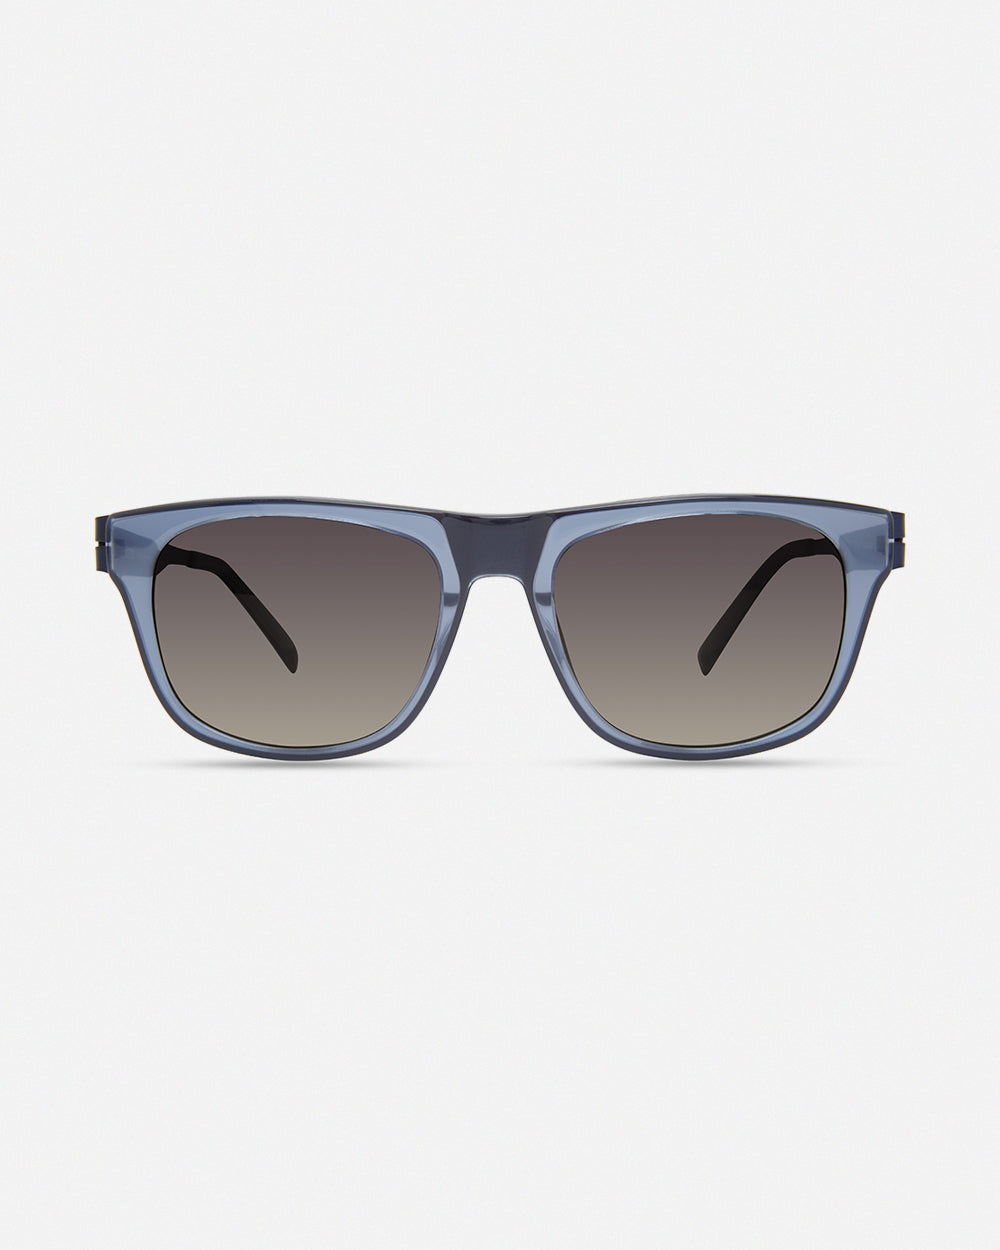 MODO Eyewear | Quality Lightweight Glasses & Sunglasses Since 1990